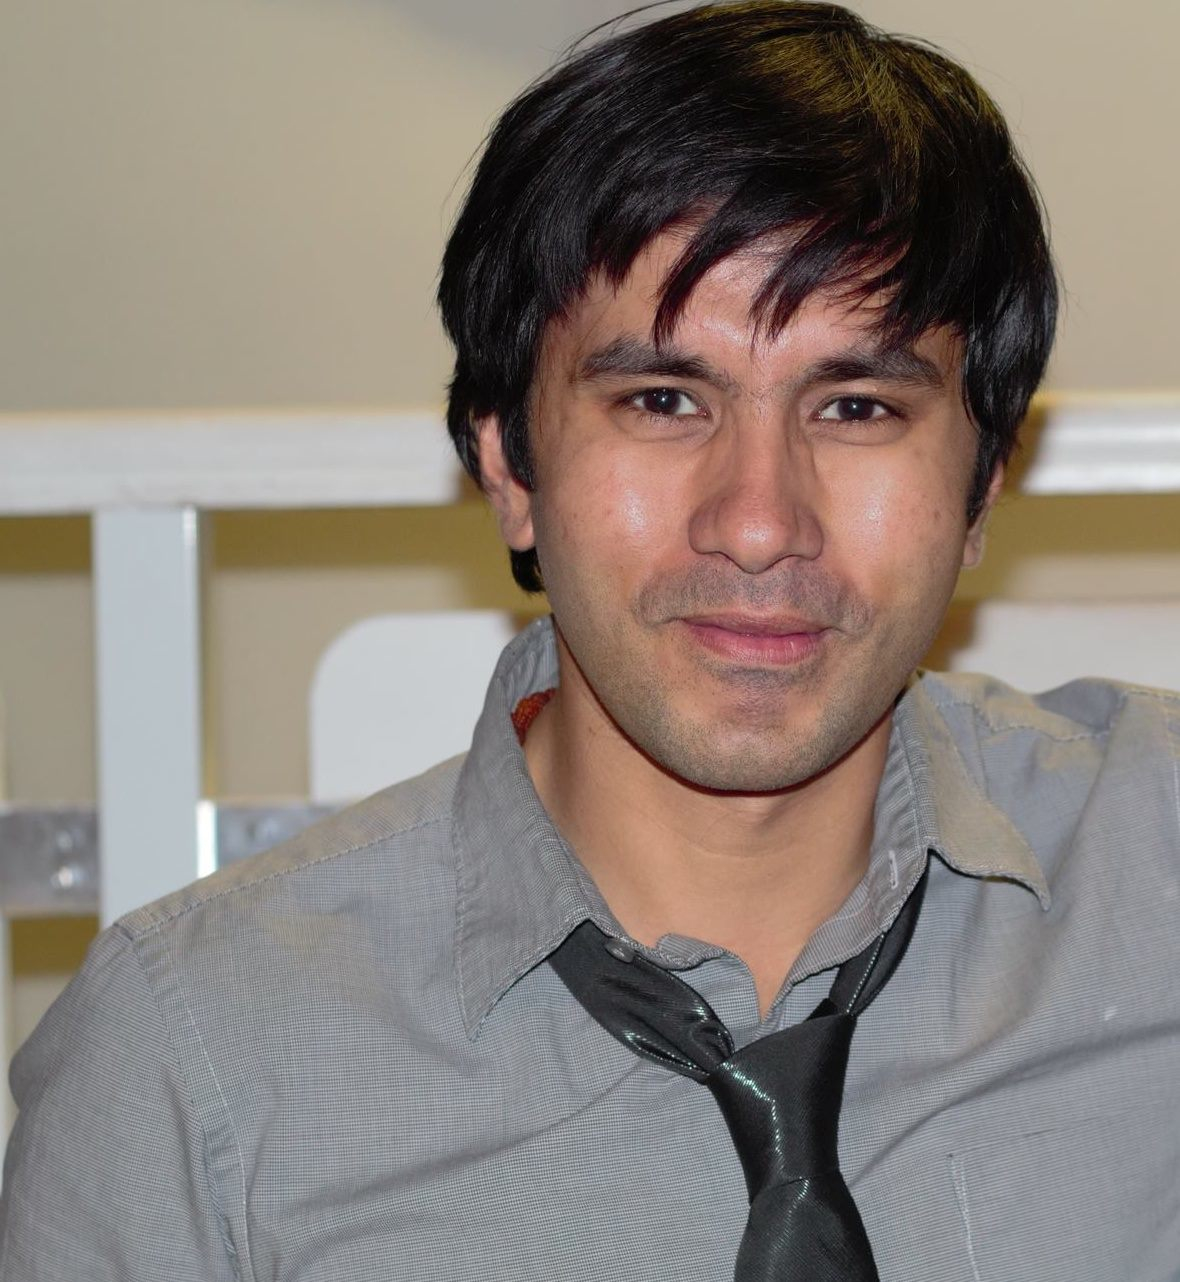 Sunil Sadarangani at the BLIND Screening, North Hollywood, CA. Sept 7, 2013